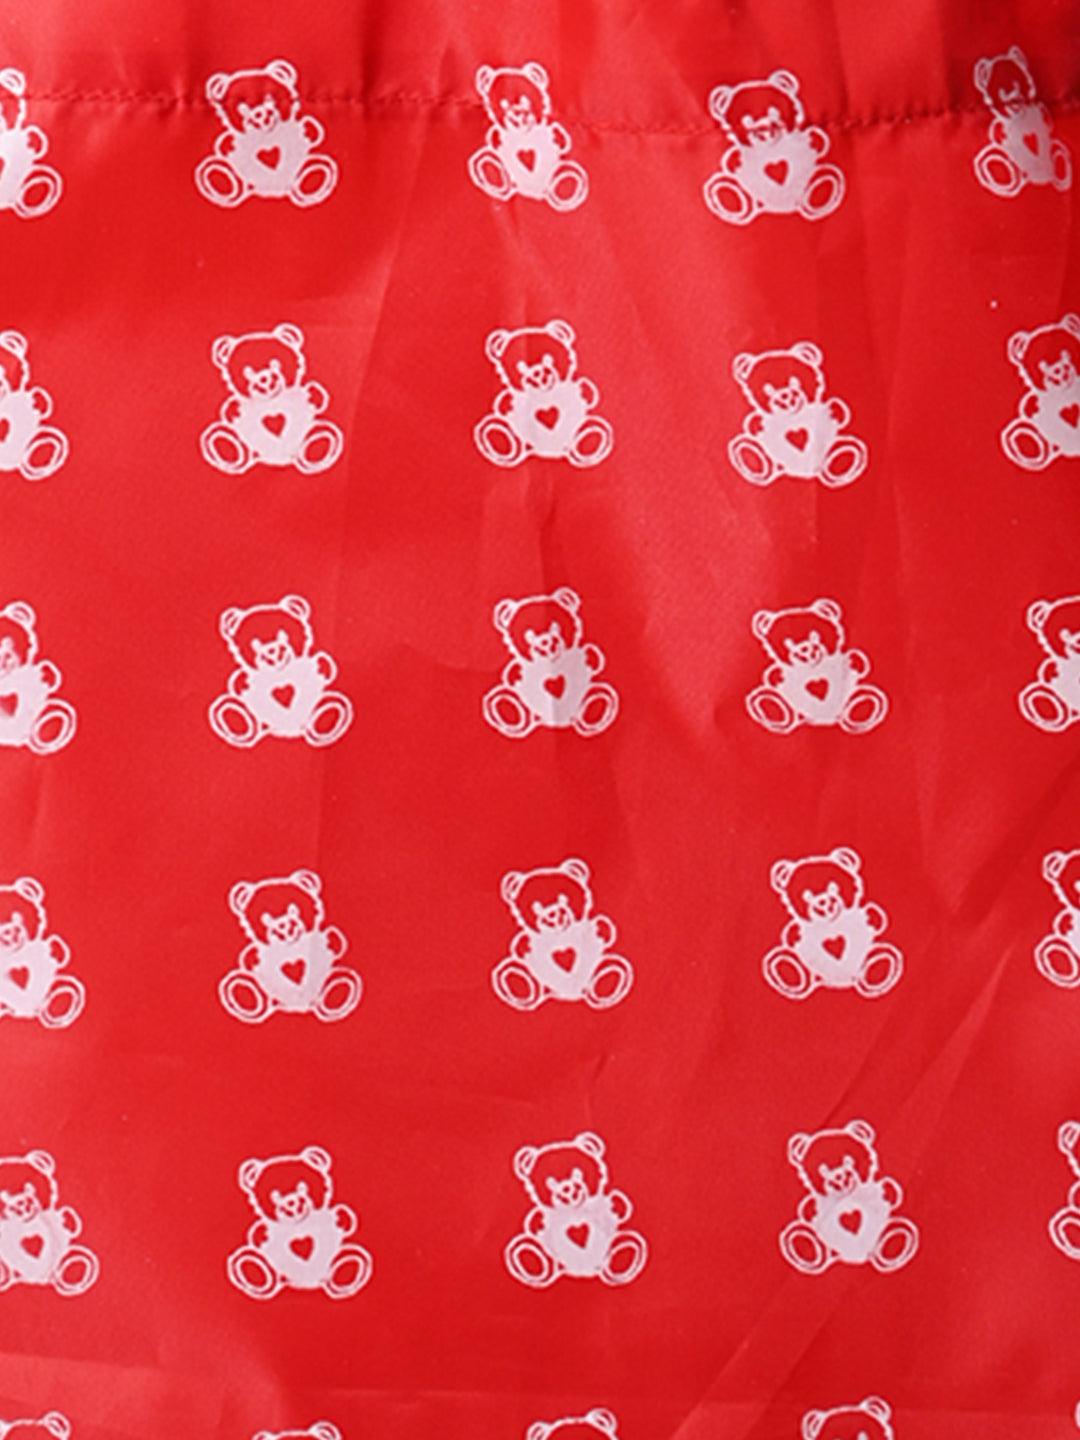 Polyester taffeta waterproof shopping grocery bag| Alibaba.com